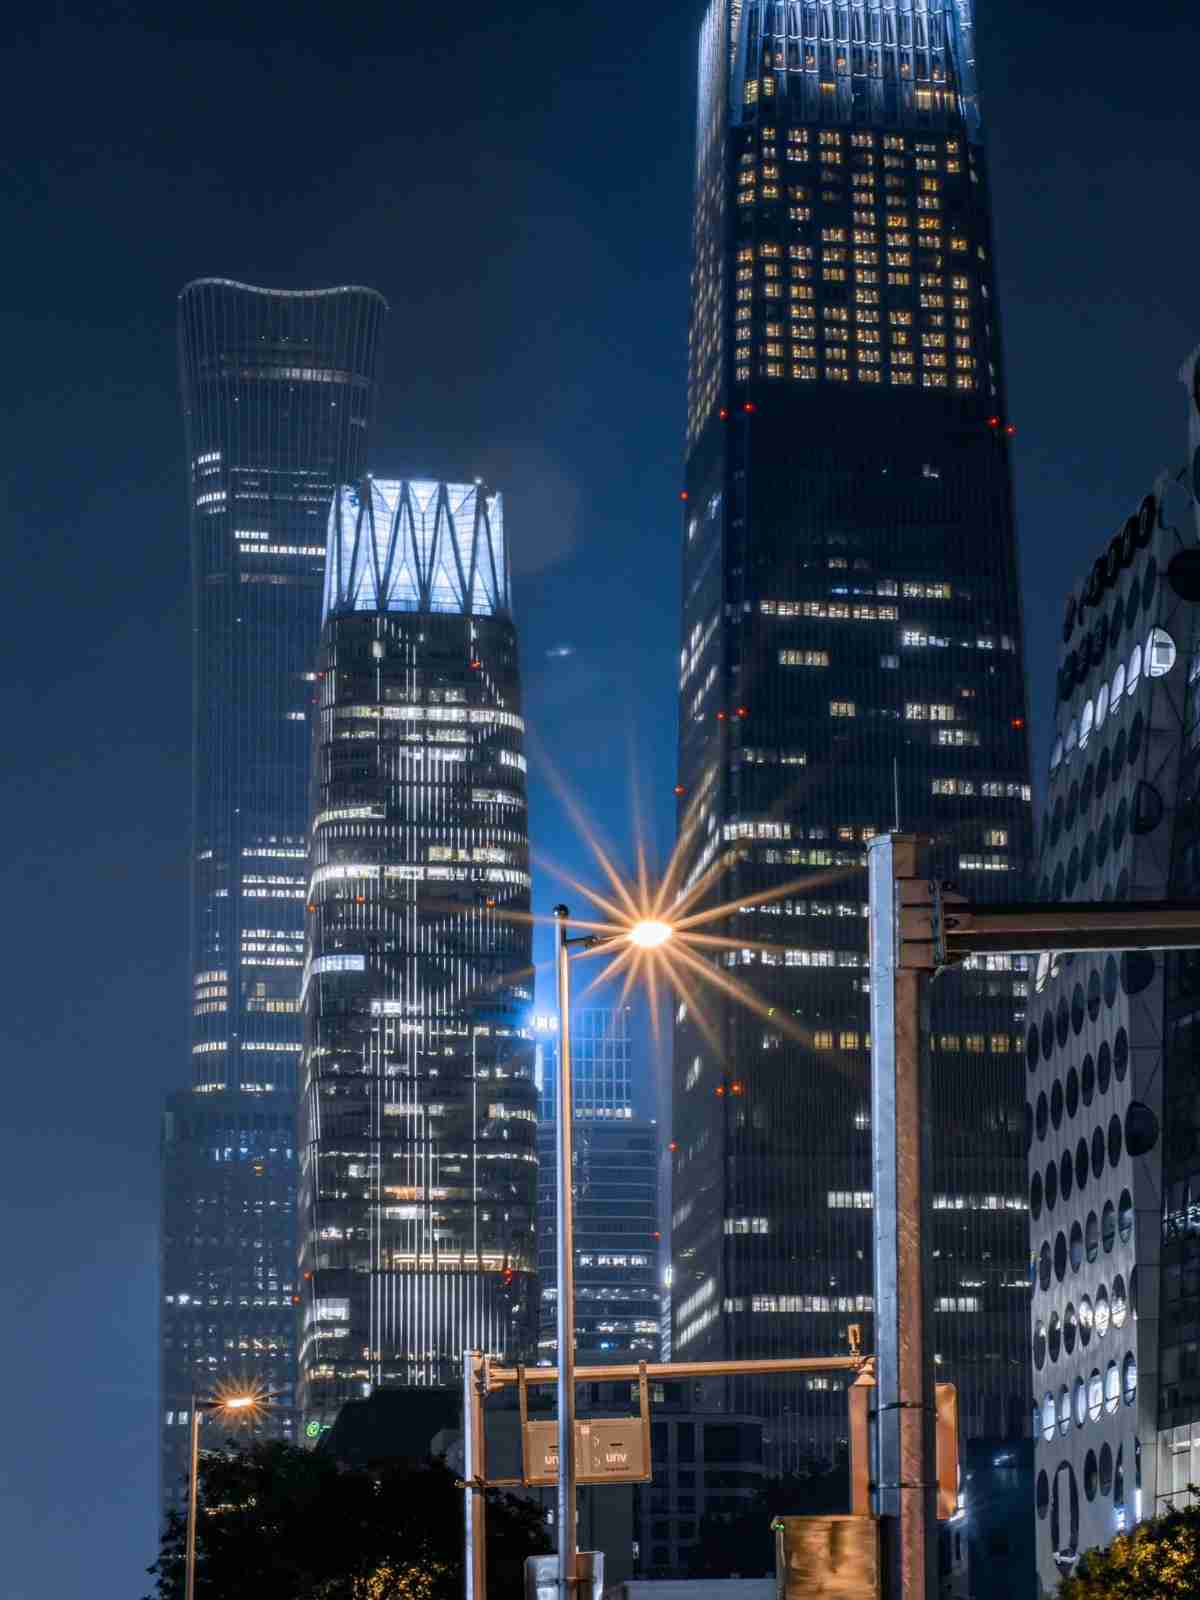 Night view of International Trade Center